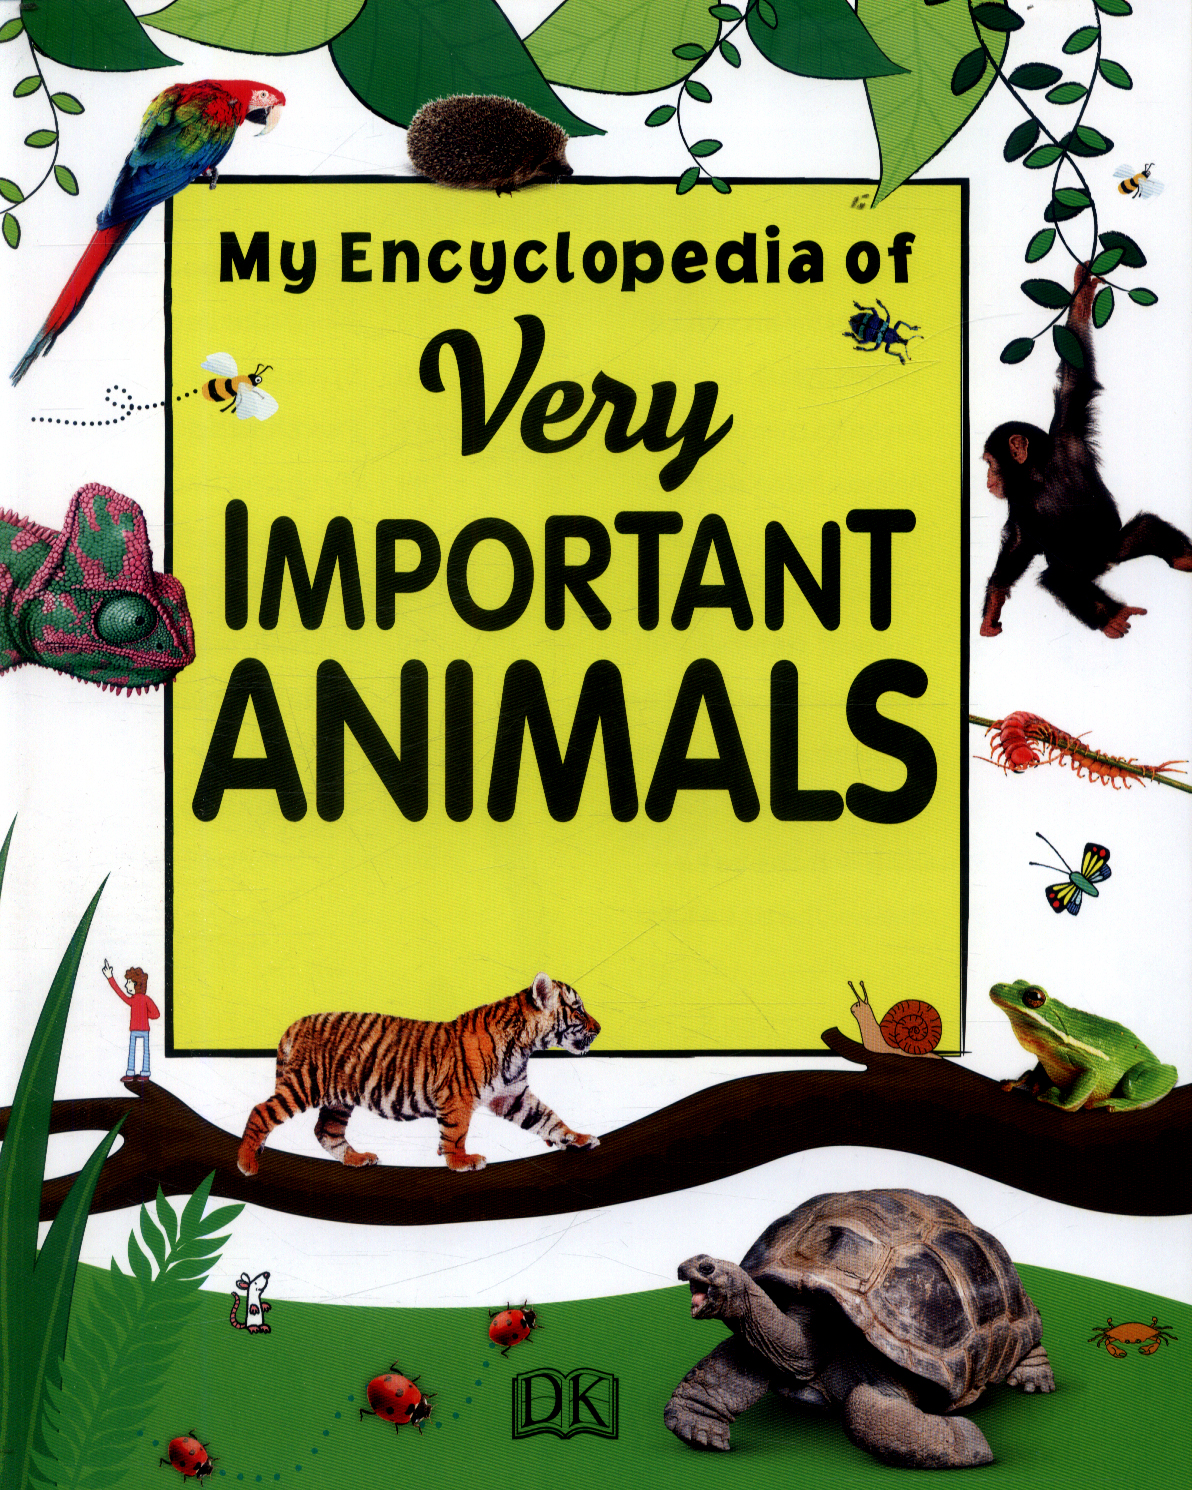 My encyclopedia of very important animals